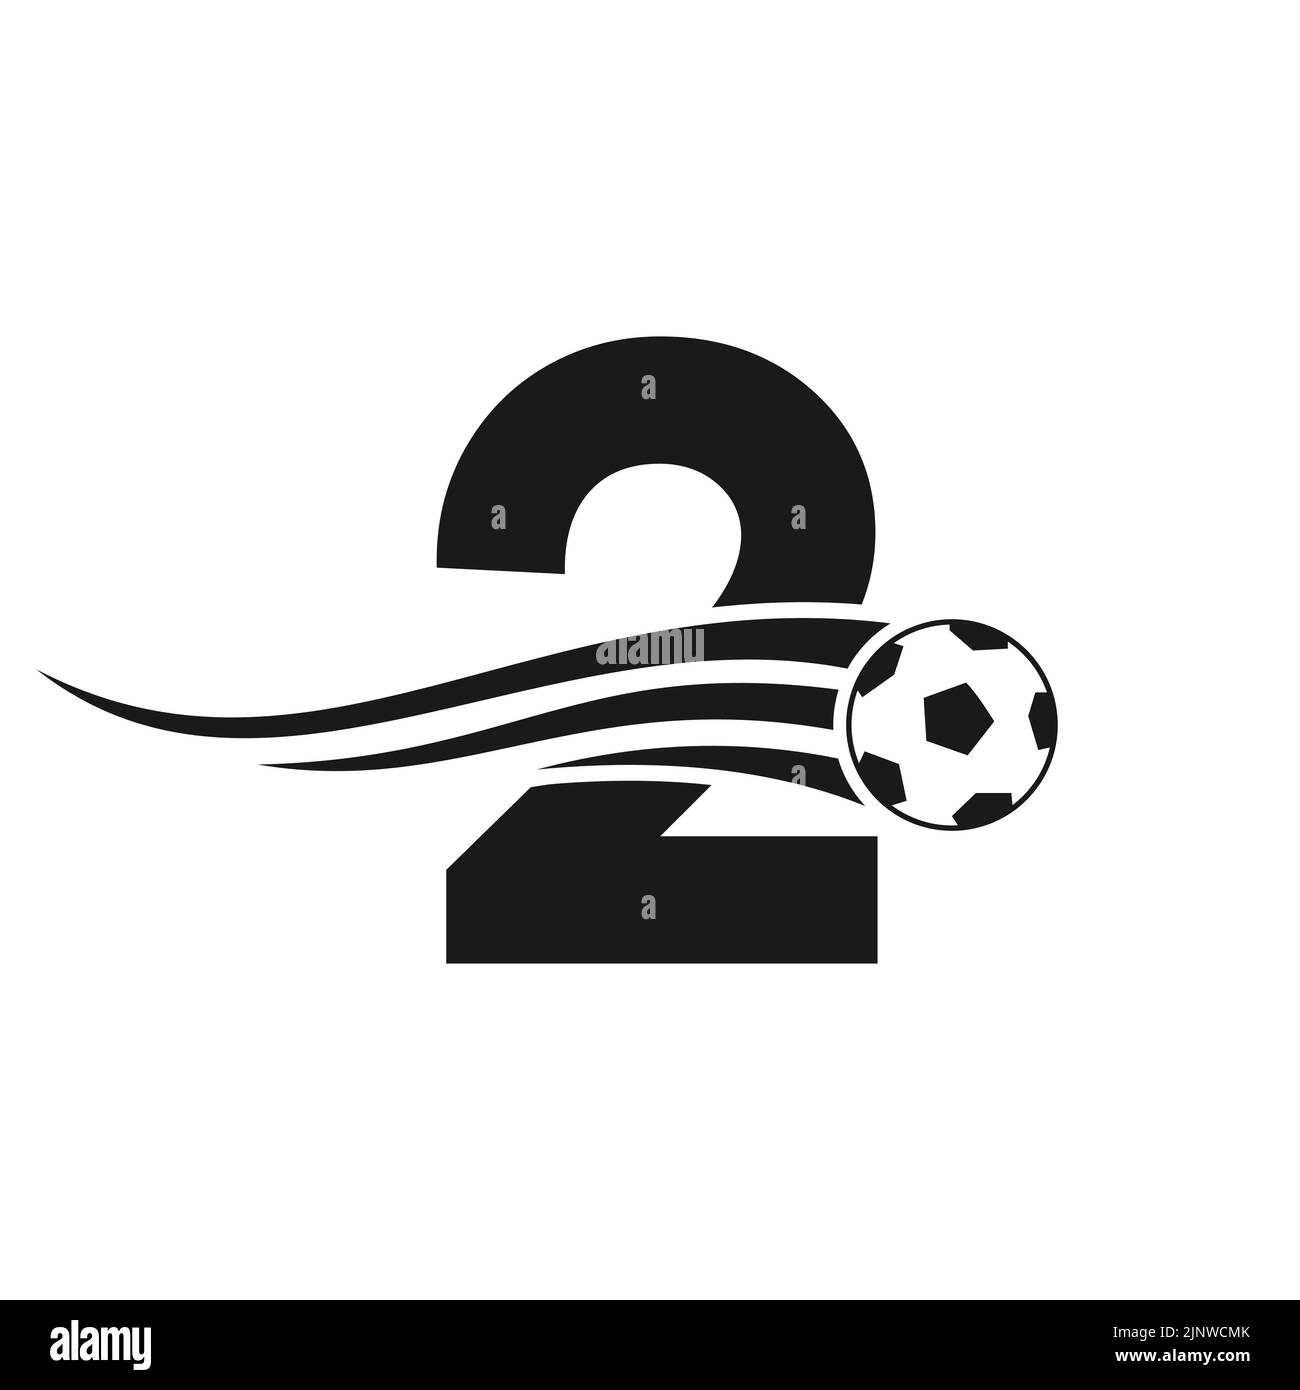 Soccer Football Logo On Letter 2 Sign. Soccer Club Emblem Concept Of Football Team Icon Stock Vector